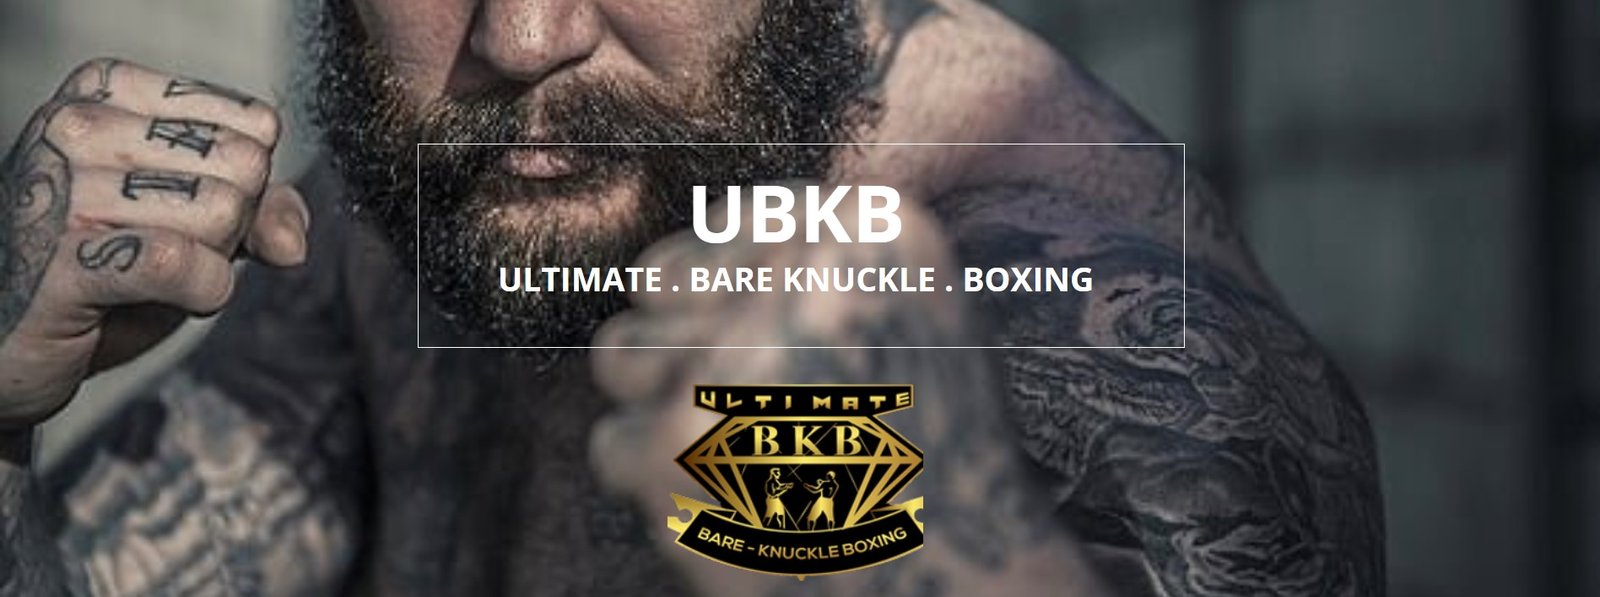 Ultimate Bare Knuckle Boxing (UBKB)